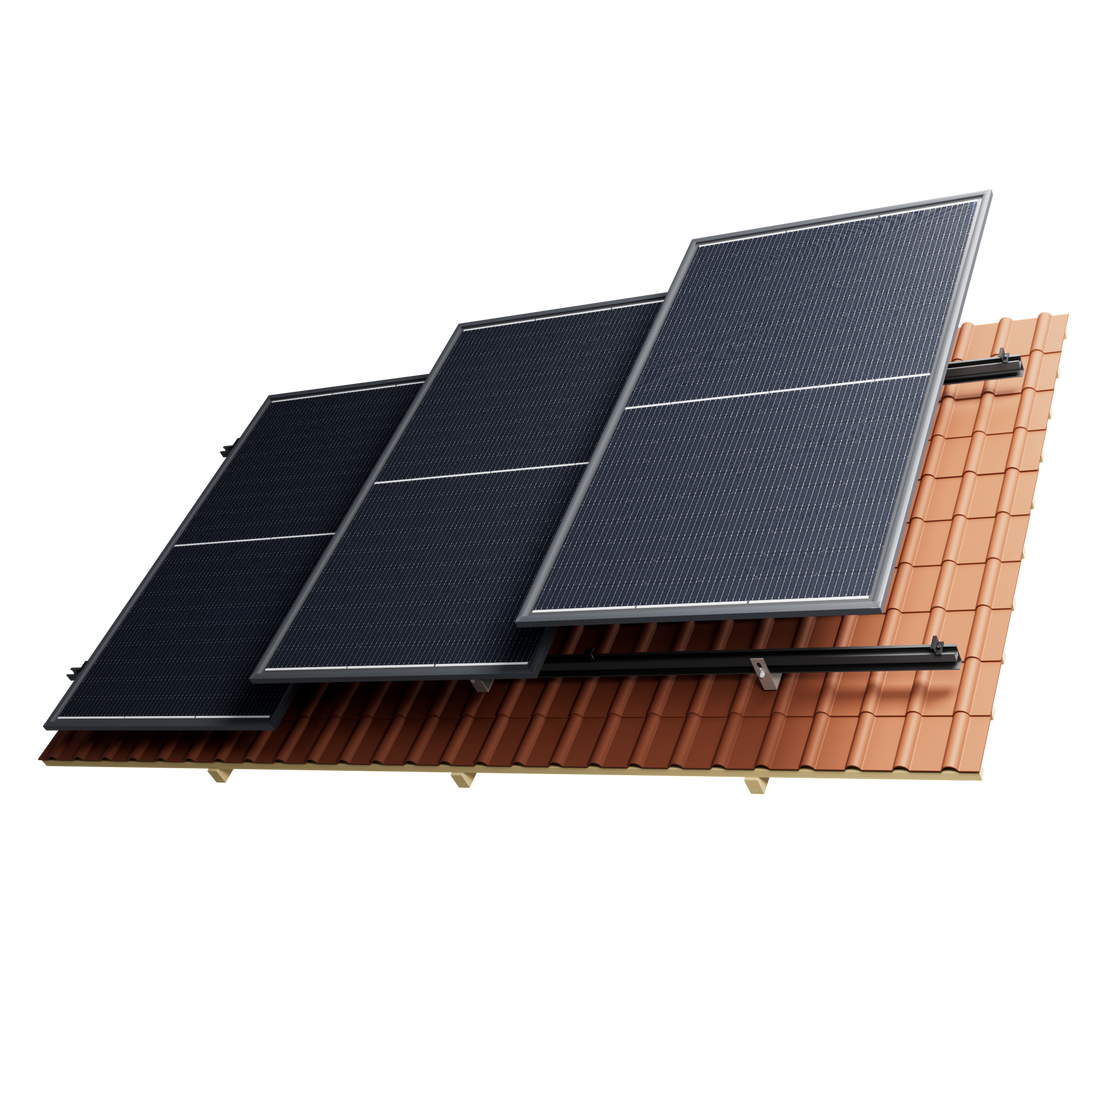 on-roof-solar-roof-tile-kits-go-renewables